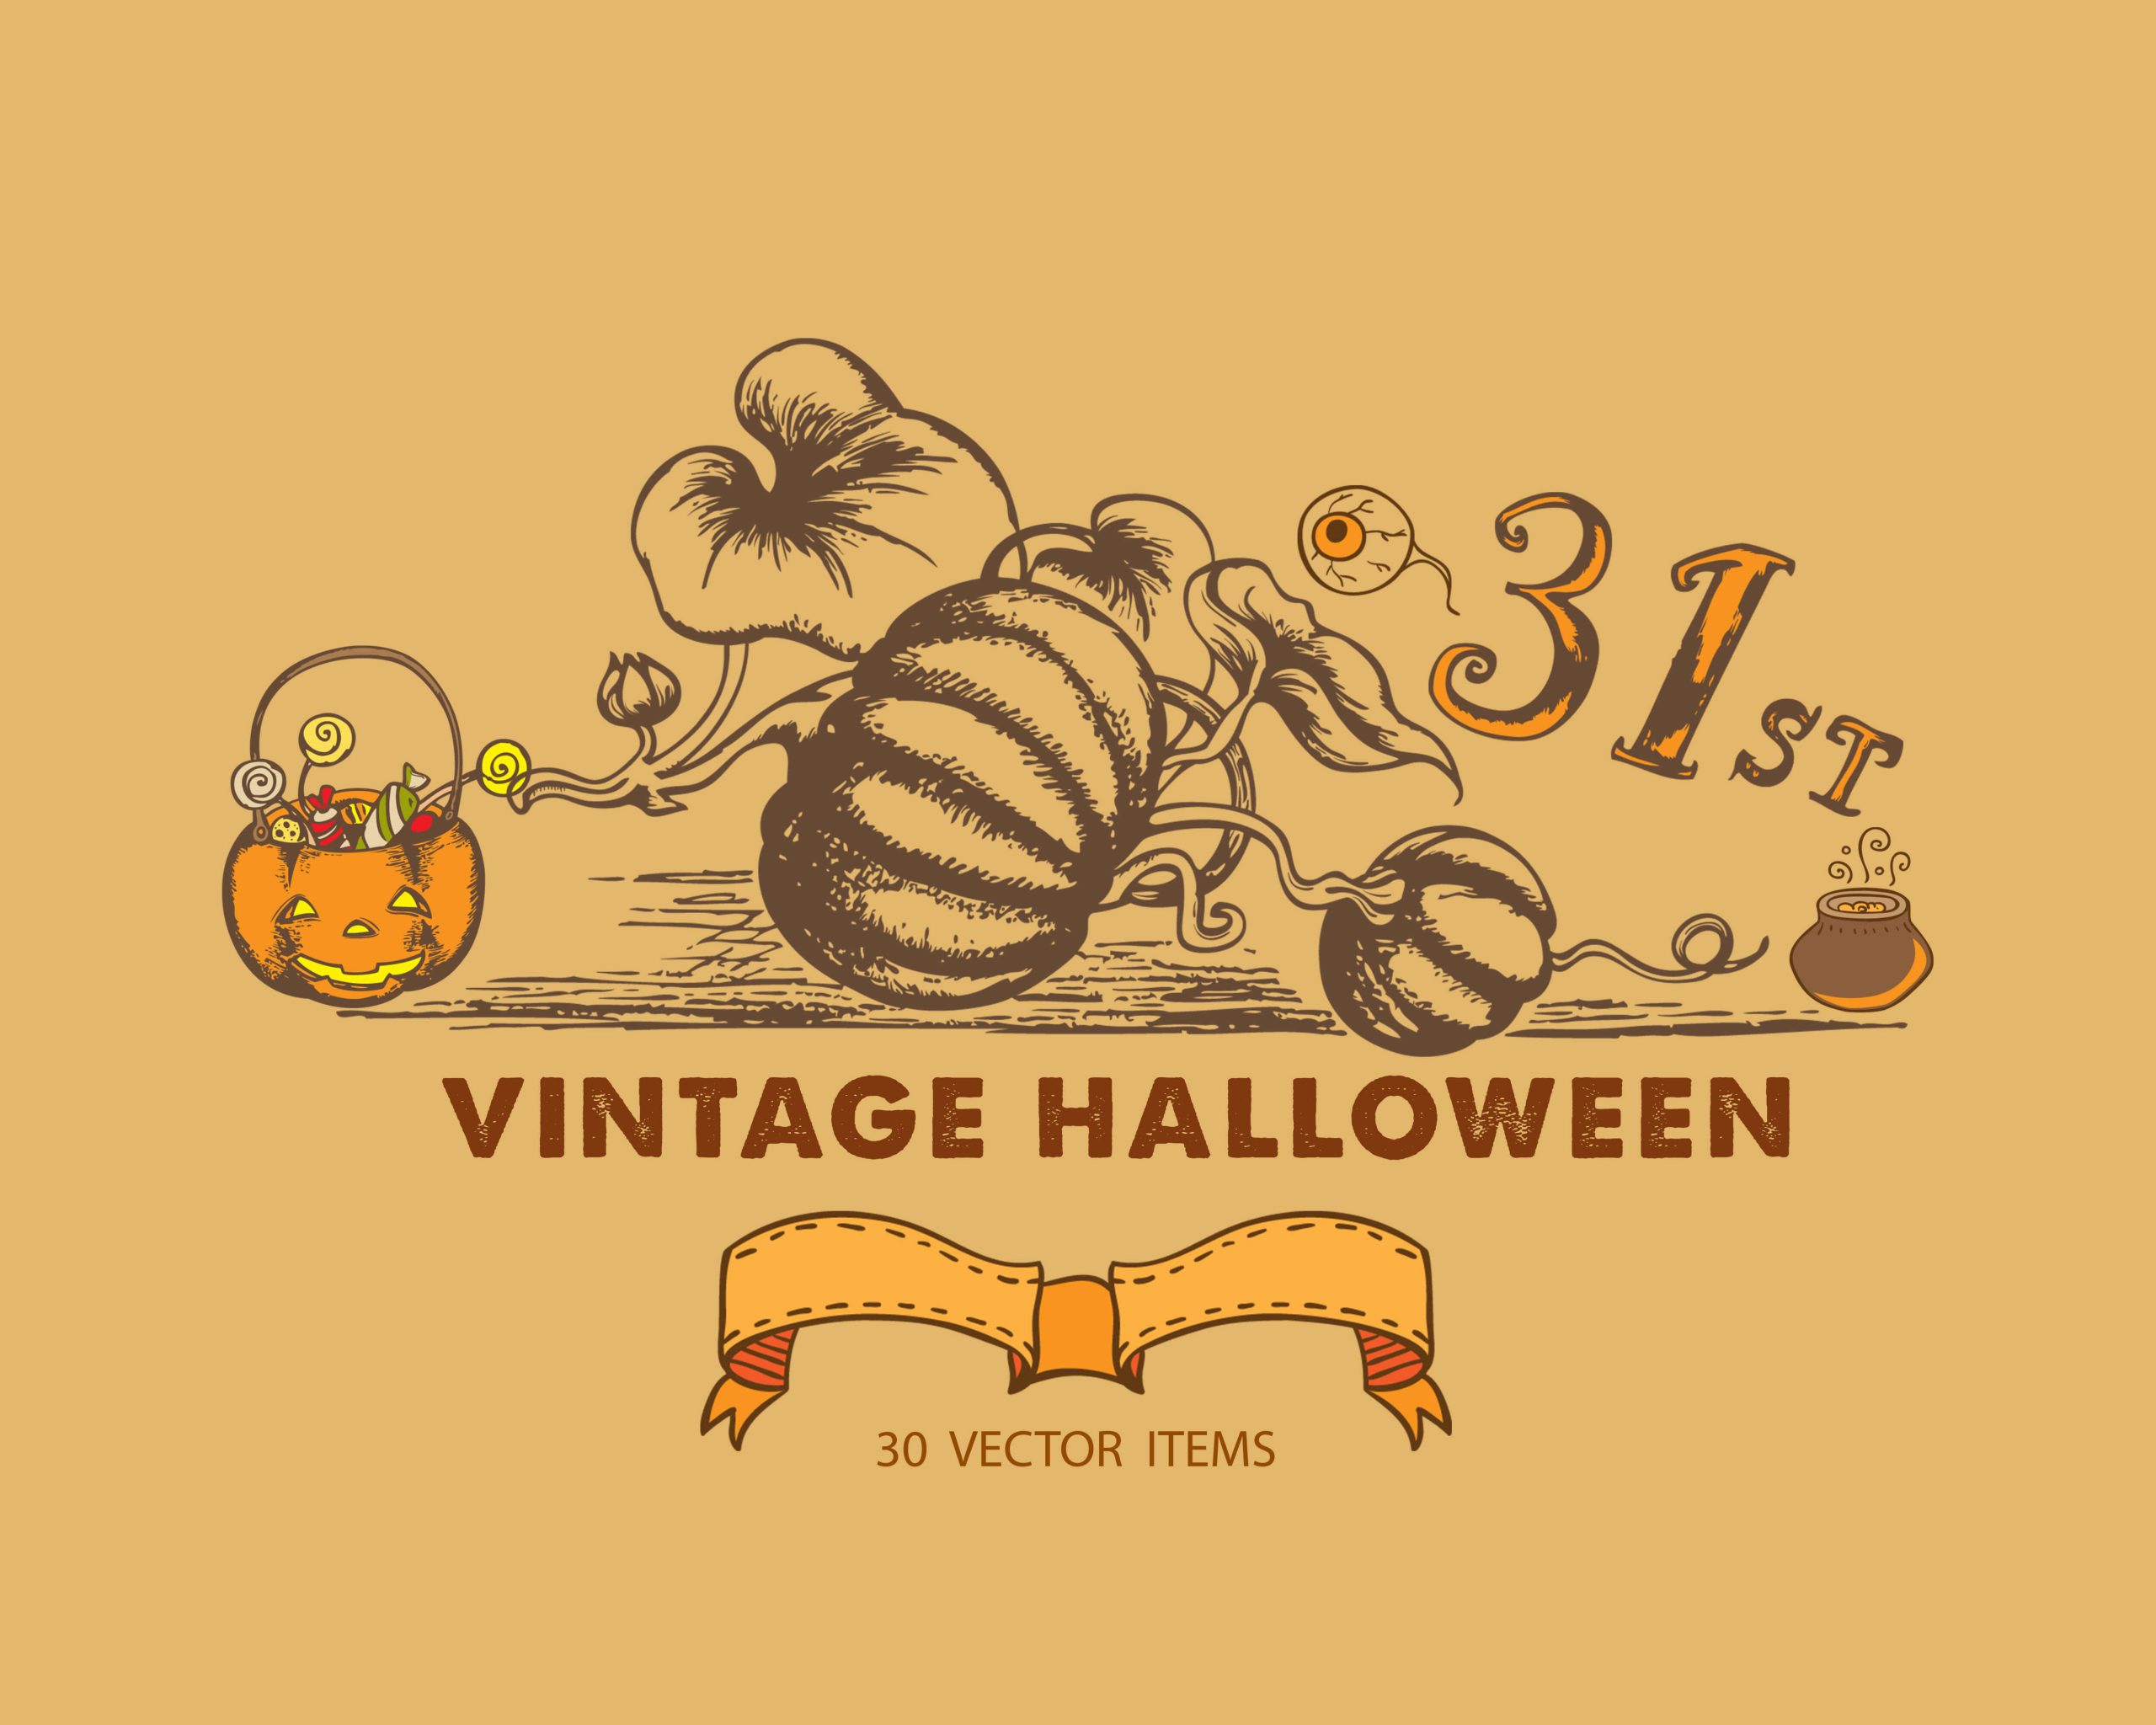 Spooky Vector Images - 30 Vintage Halloween 